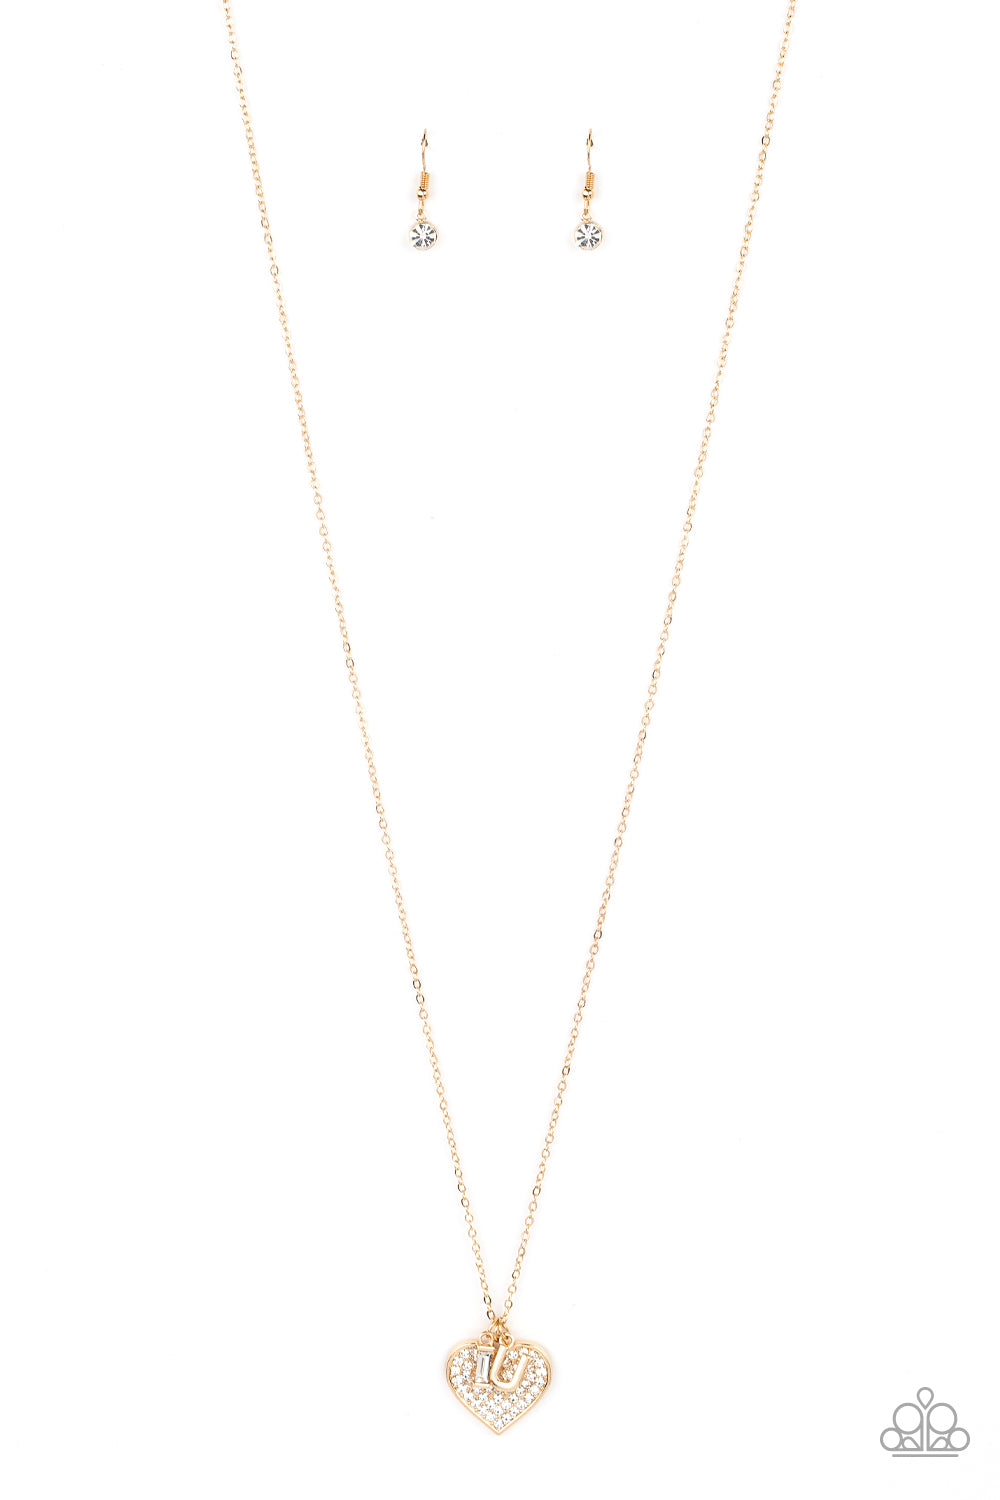 Letters of Love - Gold (Heart Rhinestone) Necklace freeshipping - JewLz4u Gemstone Gallery